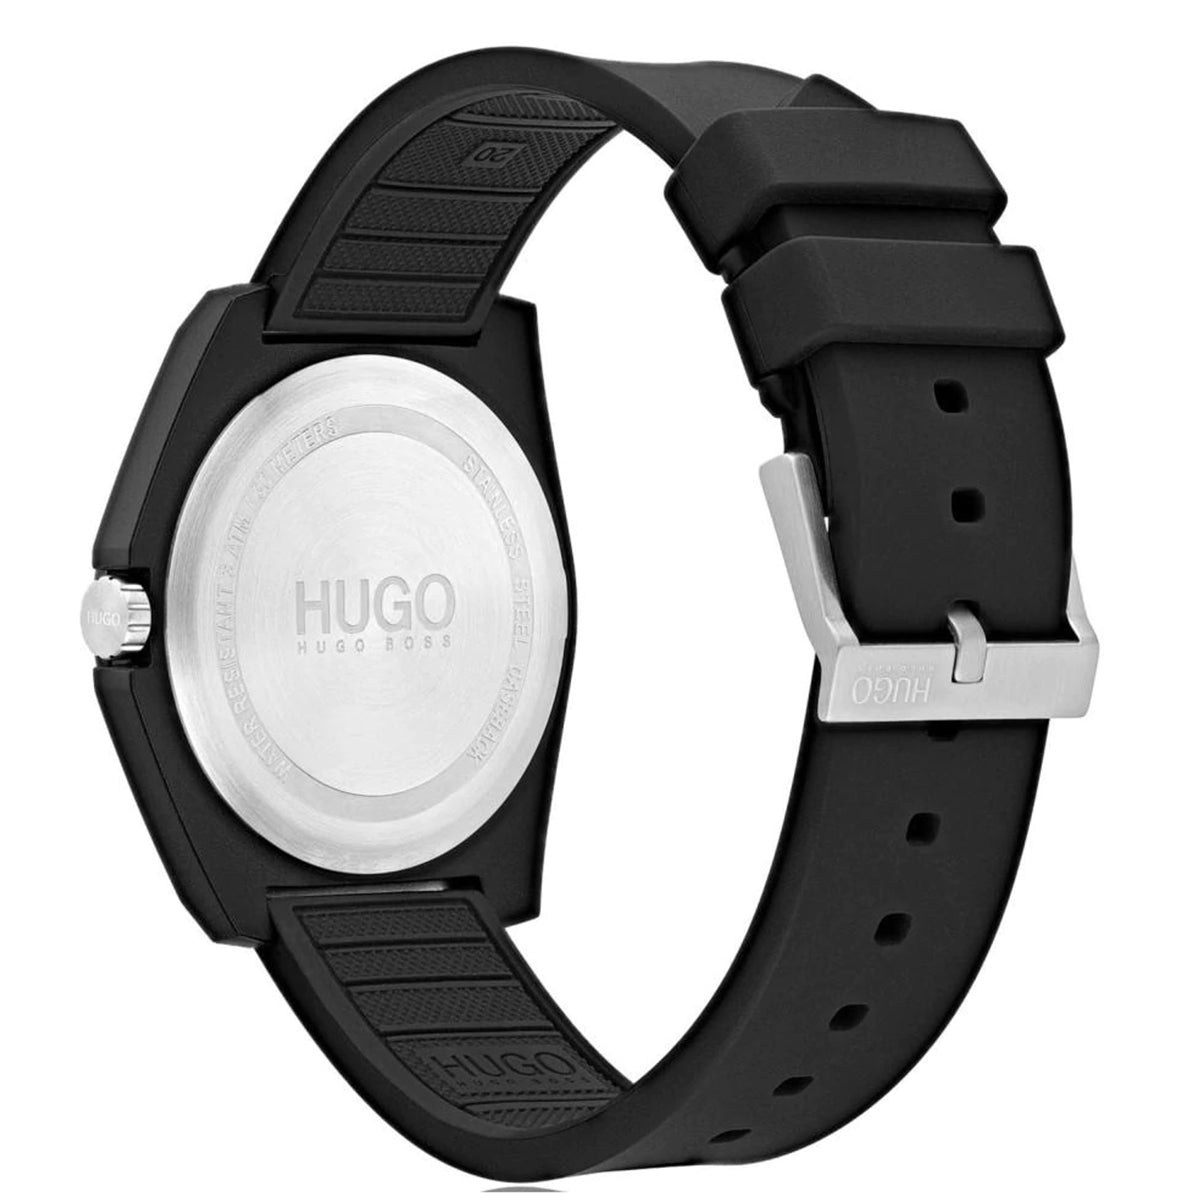 Hugo Boss - Play - HB152.0006